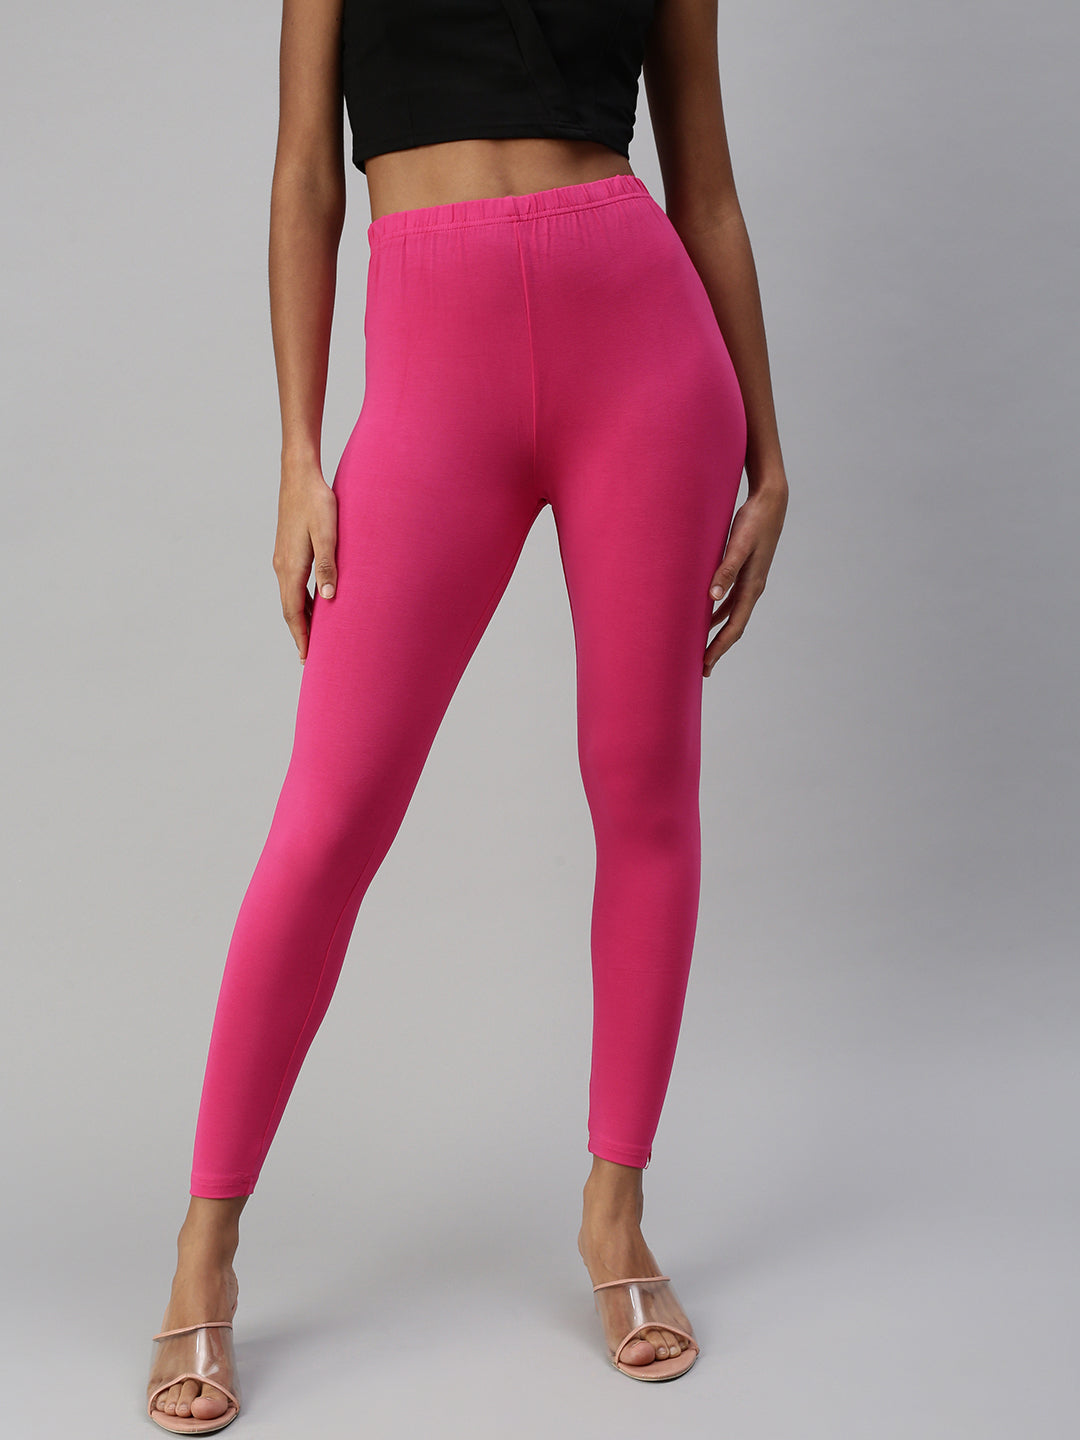 SALE Hot Neon Pink Stretch Cotton Leggings 